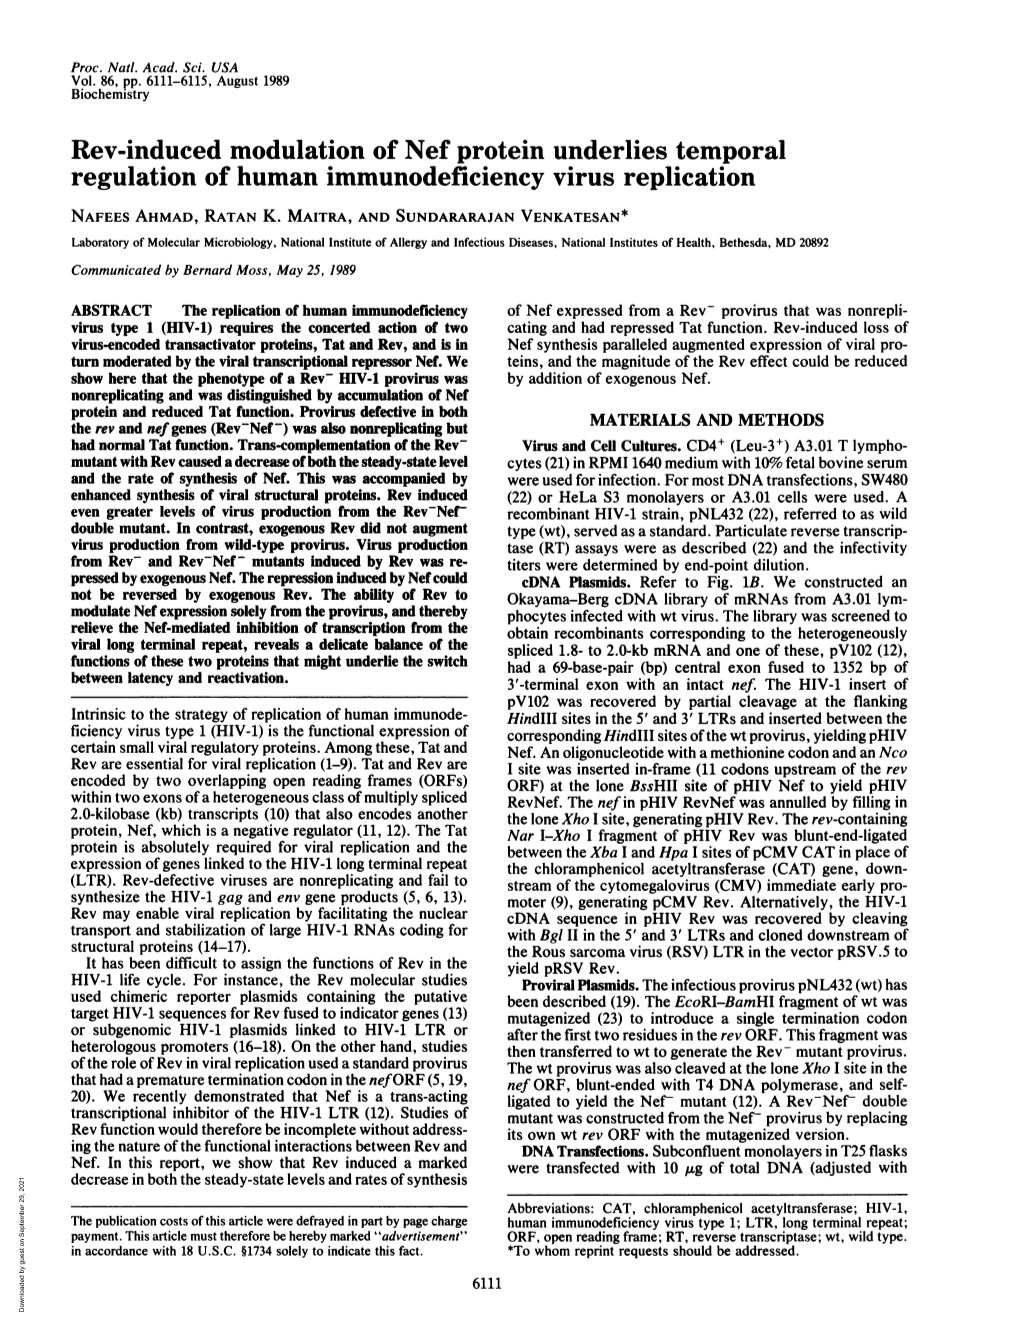 Rev-Induced Modulation of Nef Protein Underlies Temporal Regulation of Human Immunodeficiency Virus Replication NAFEES AHMAD, RATAN K